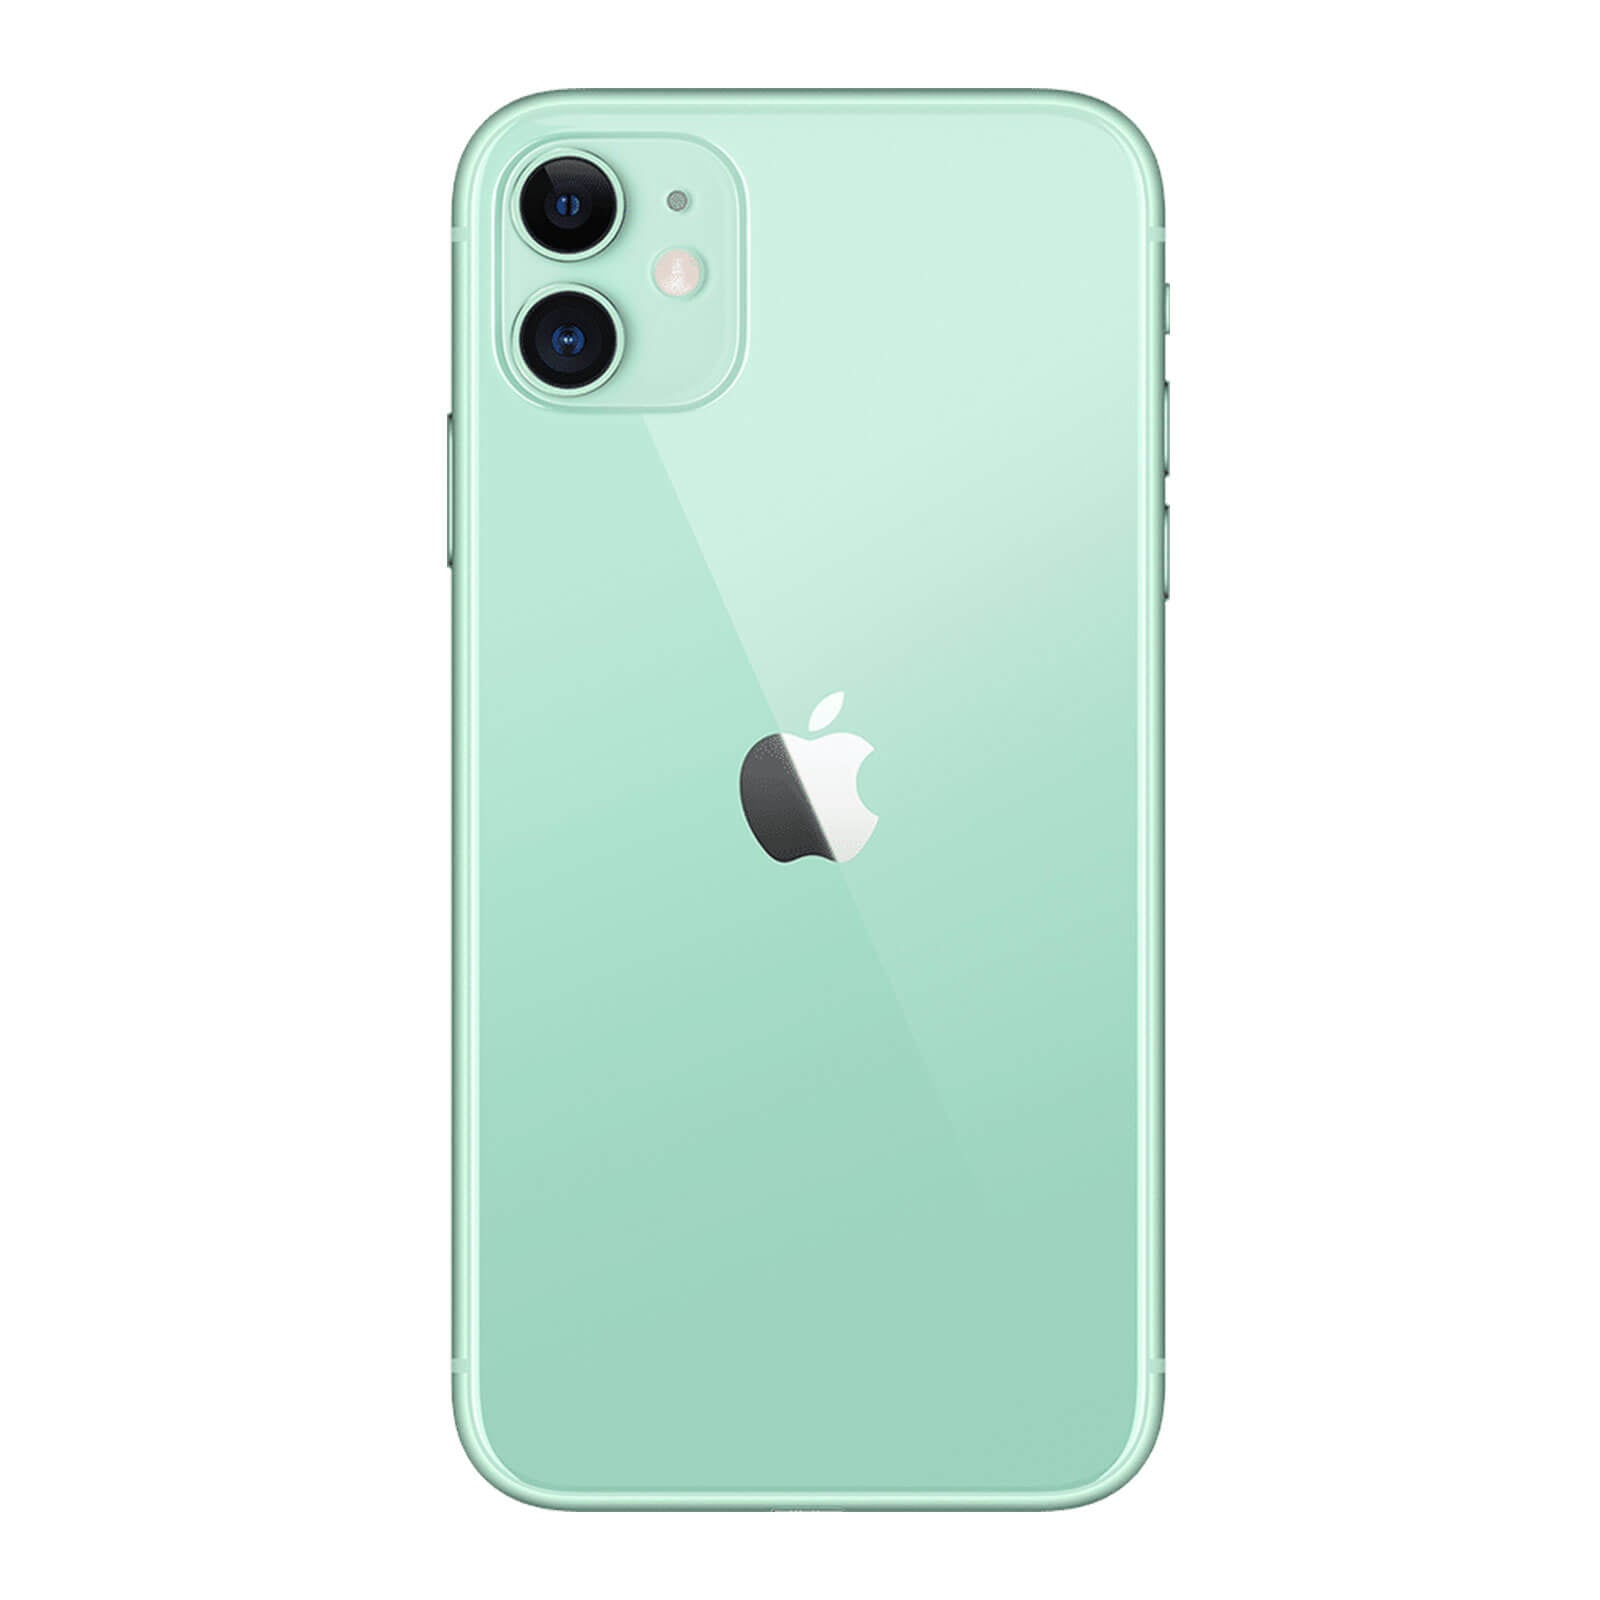 Apple iPhone 11 64GB Green Fair - Verizon